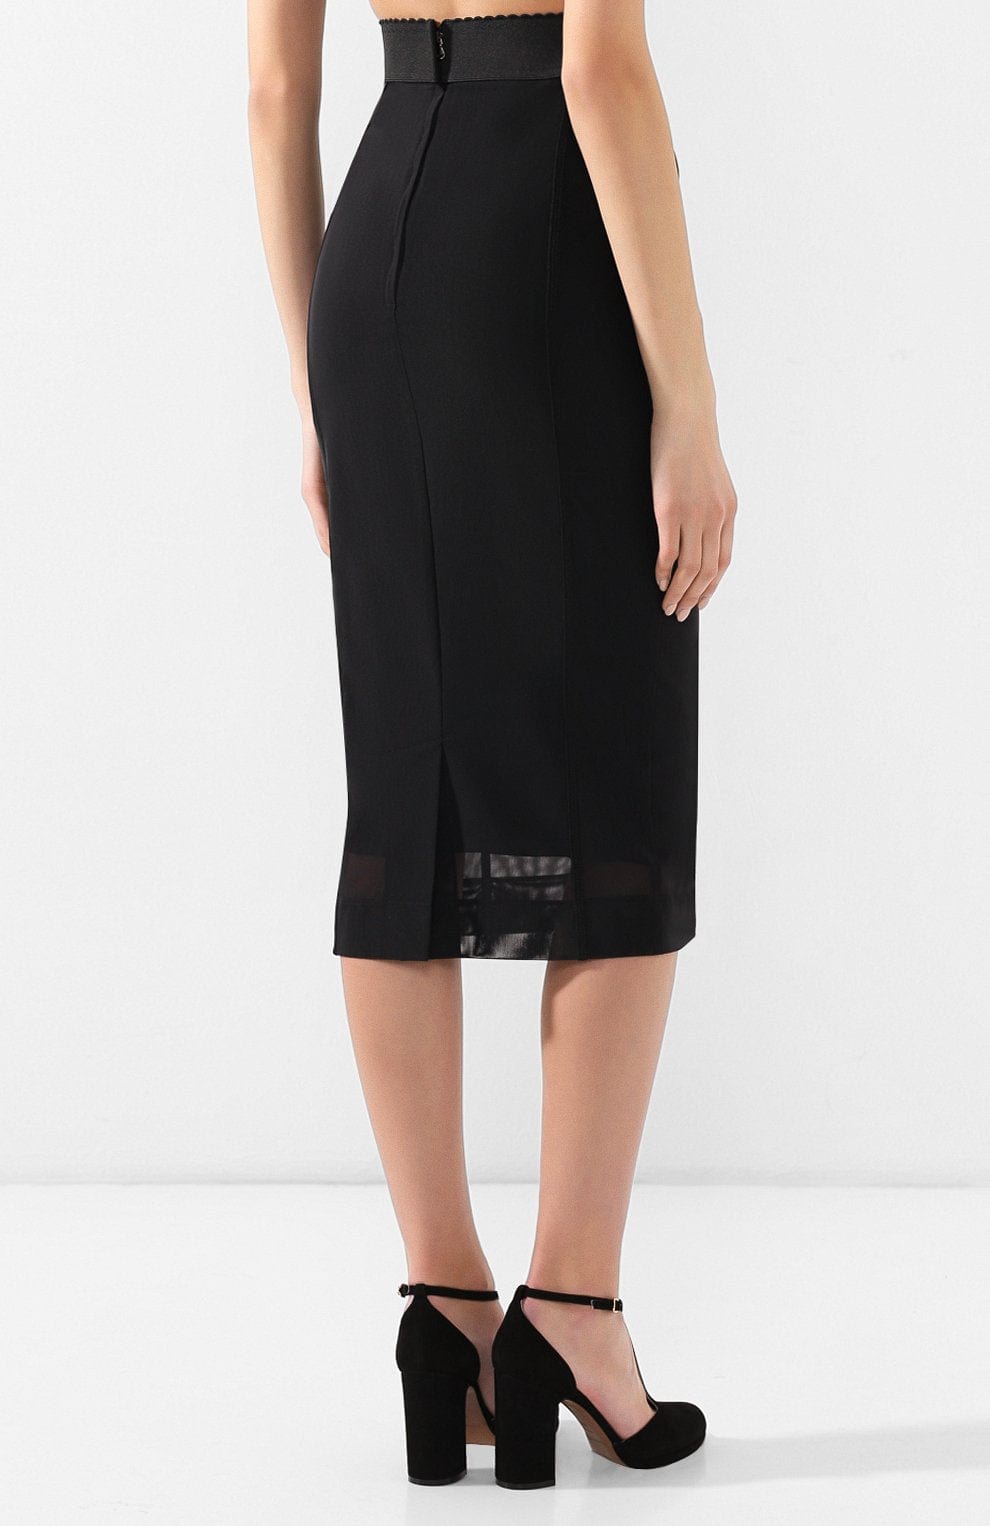 Dolce & Gabbana High-Waisted Pencil Skirt